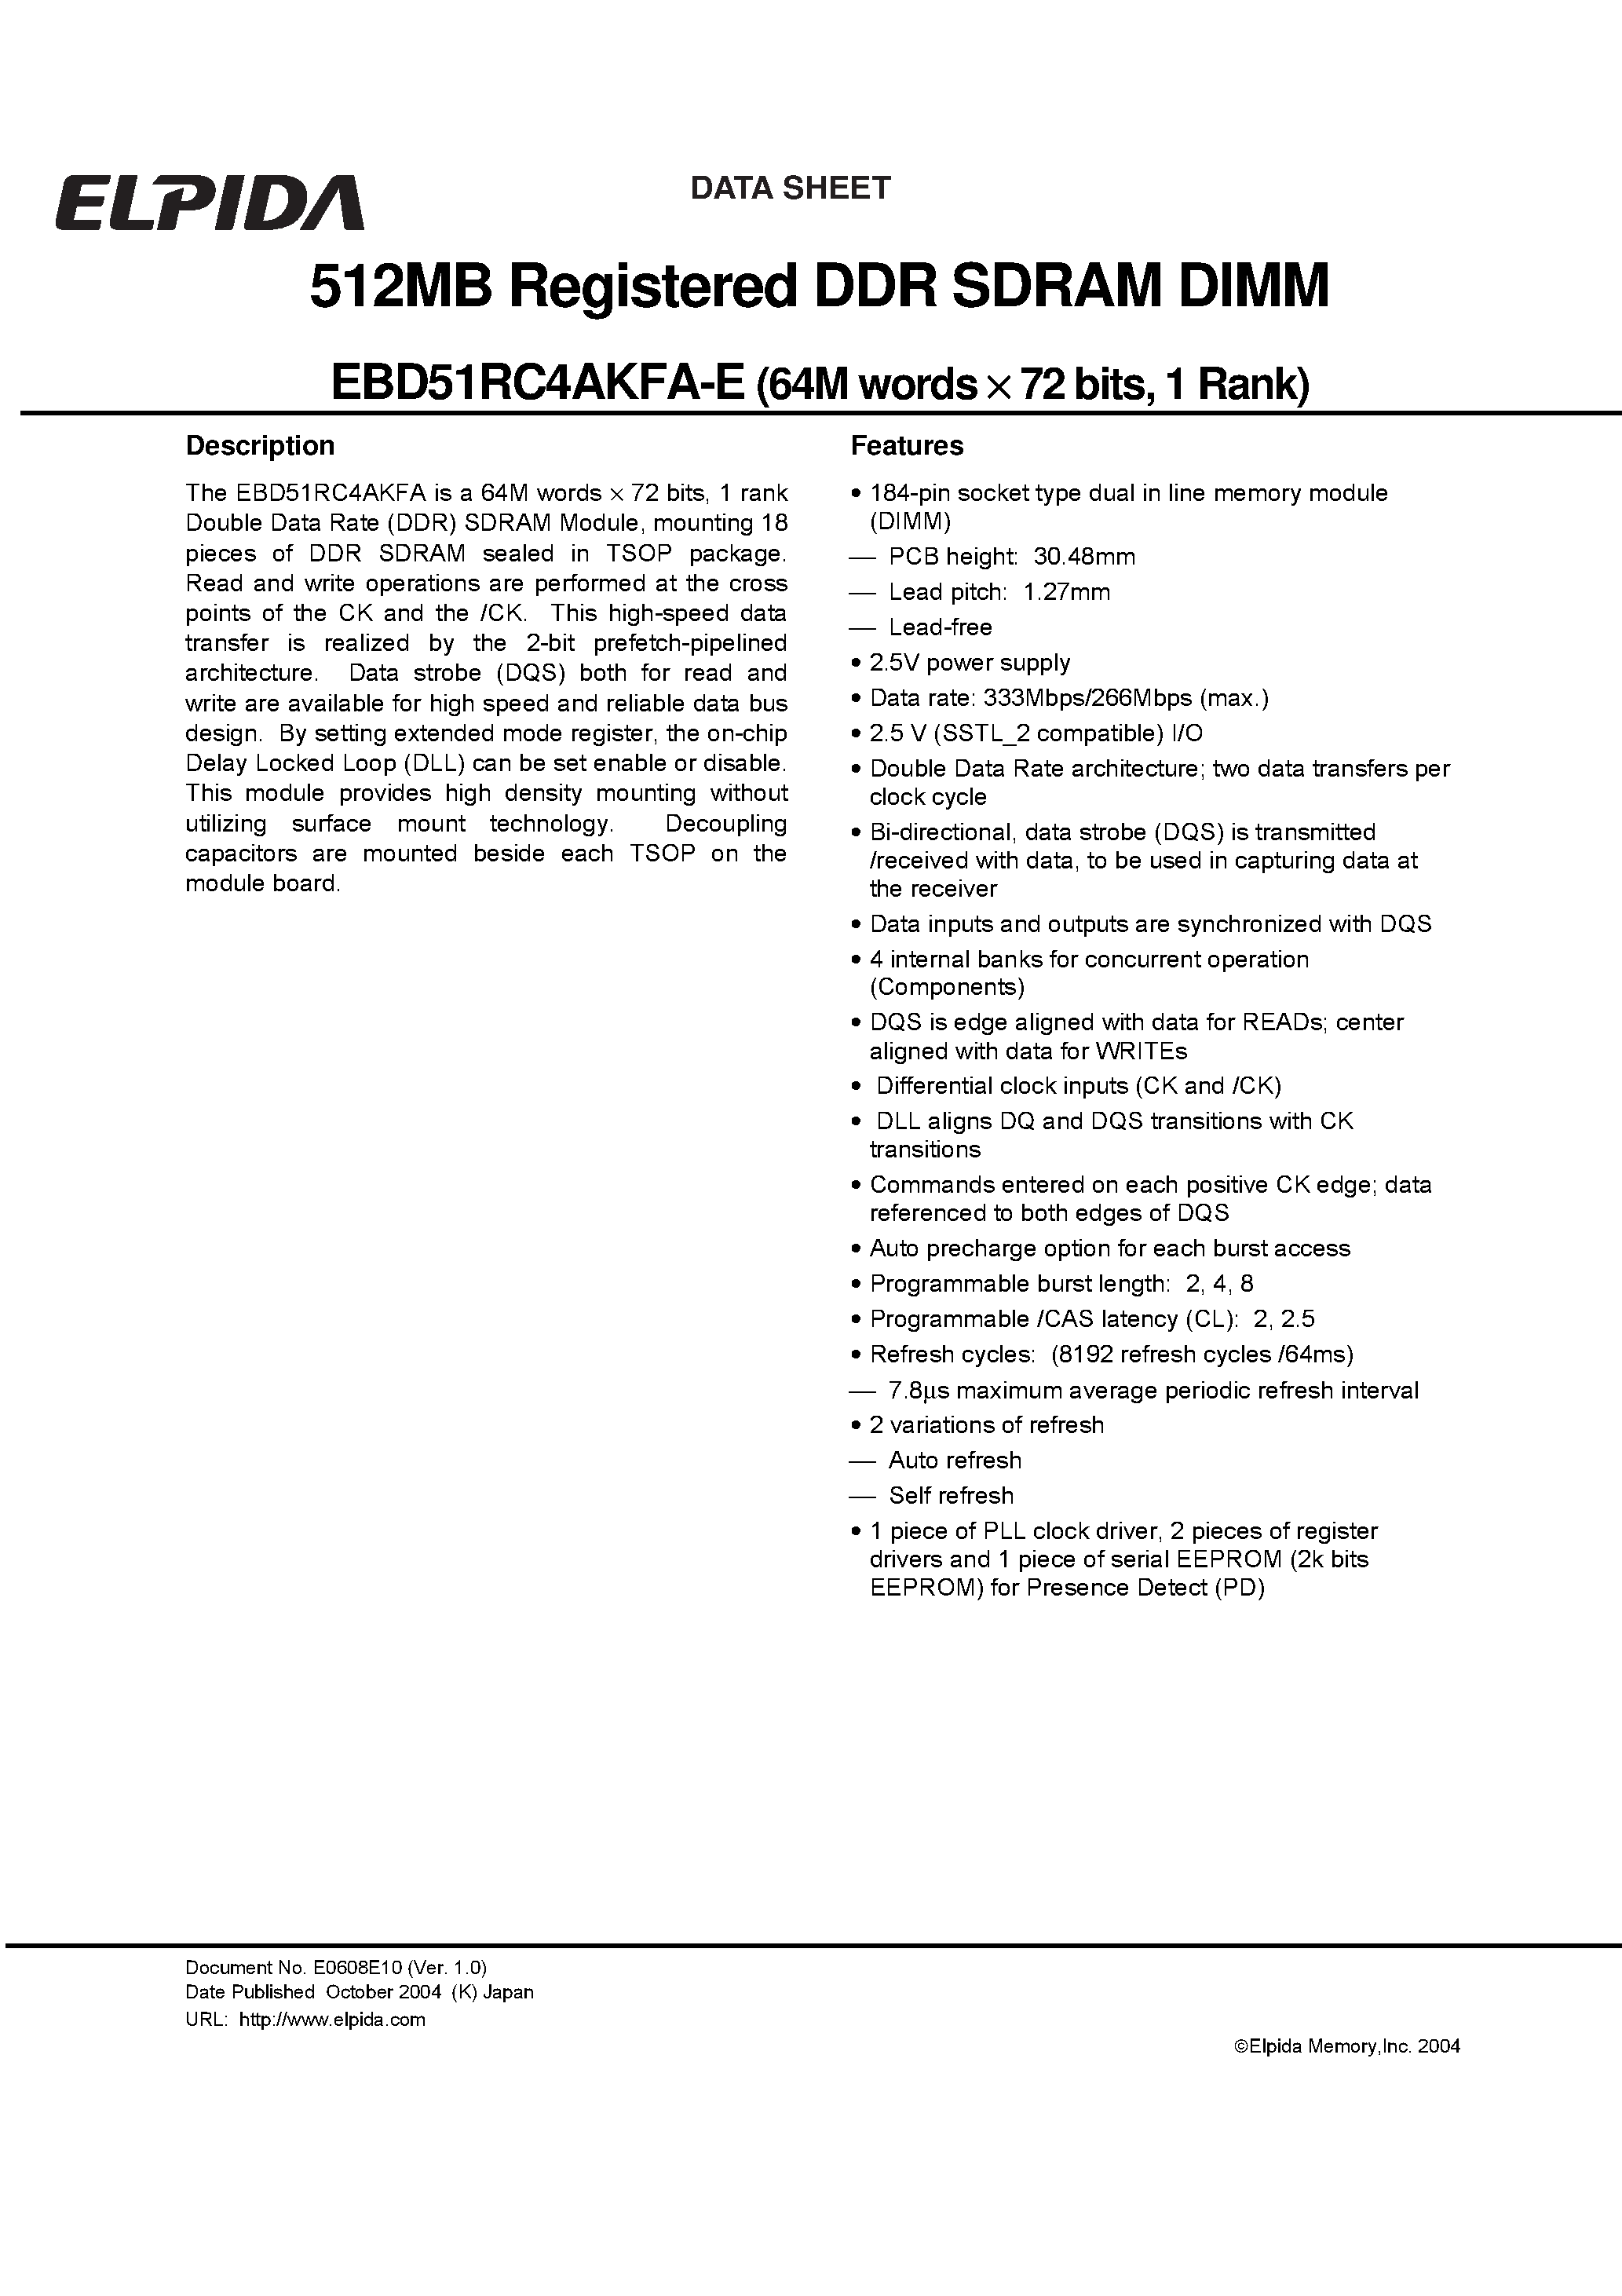 Datasheet EBD51RC4AKFA-E - 512MB Registered DDR SDRAM DIMM page 1